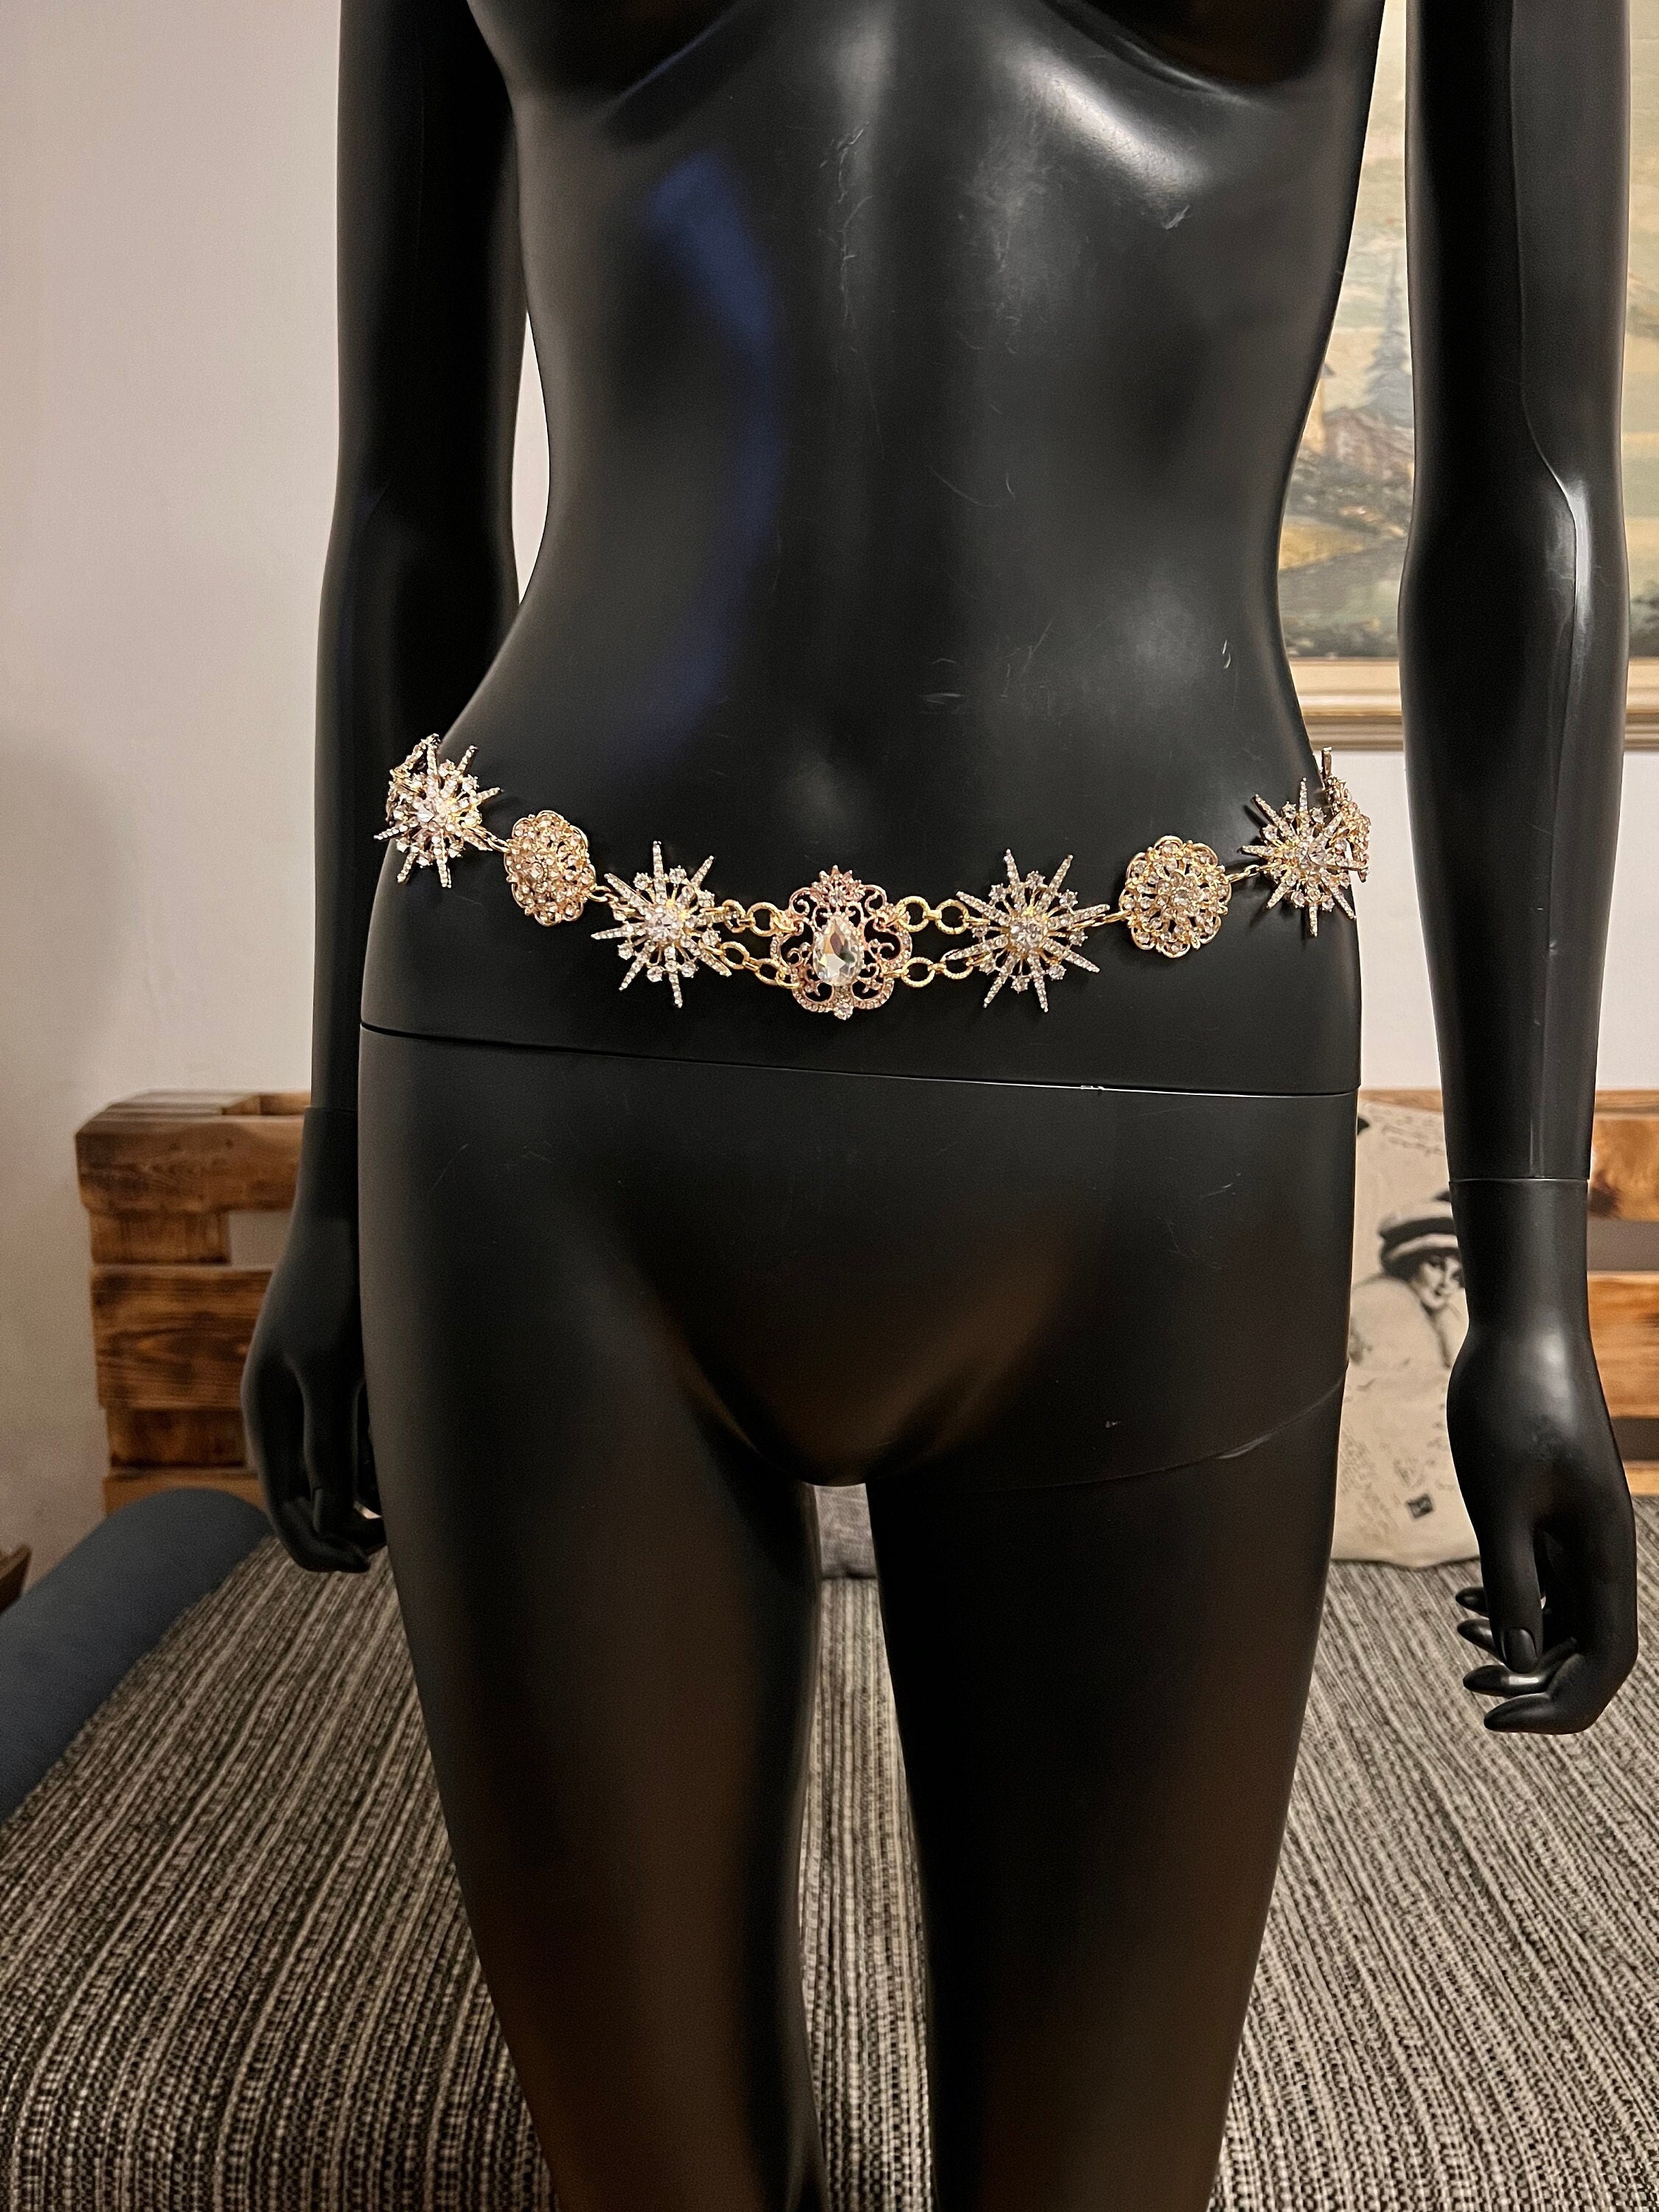 Lovful Rhinestone Chain Belts for Women,Double Row Crystal